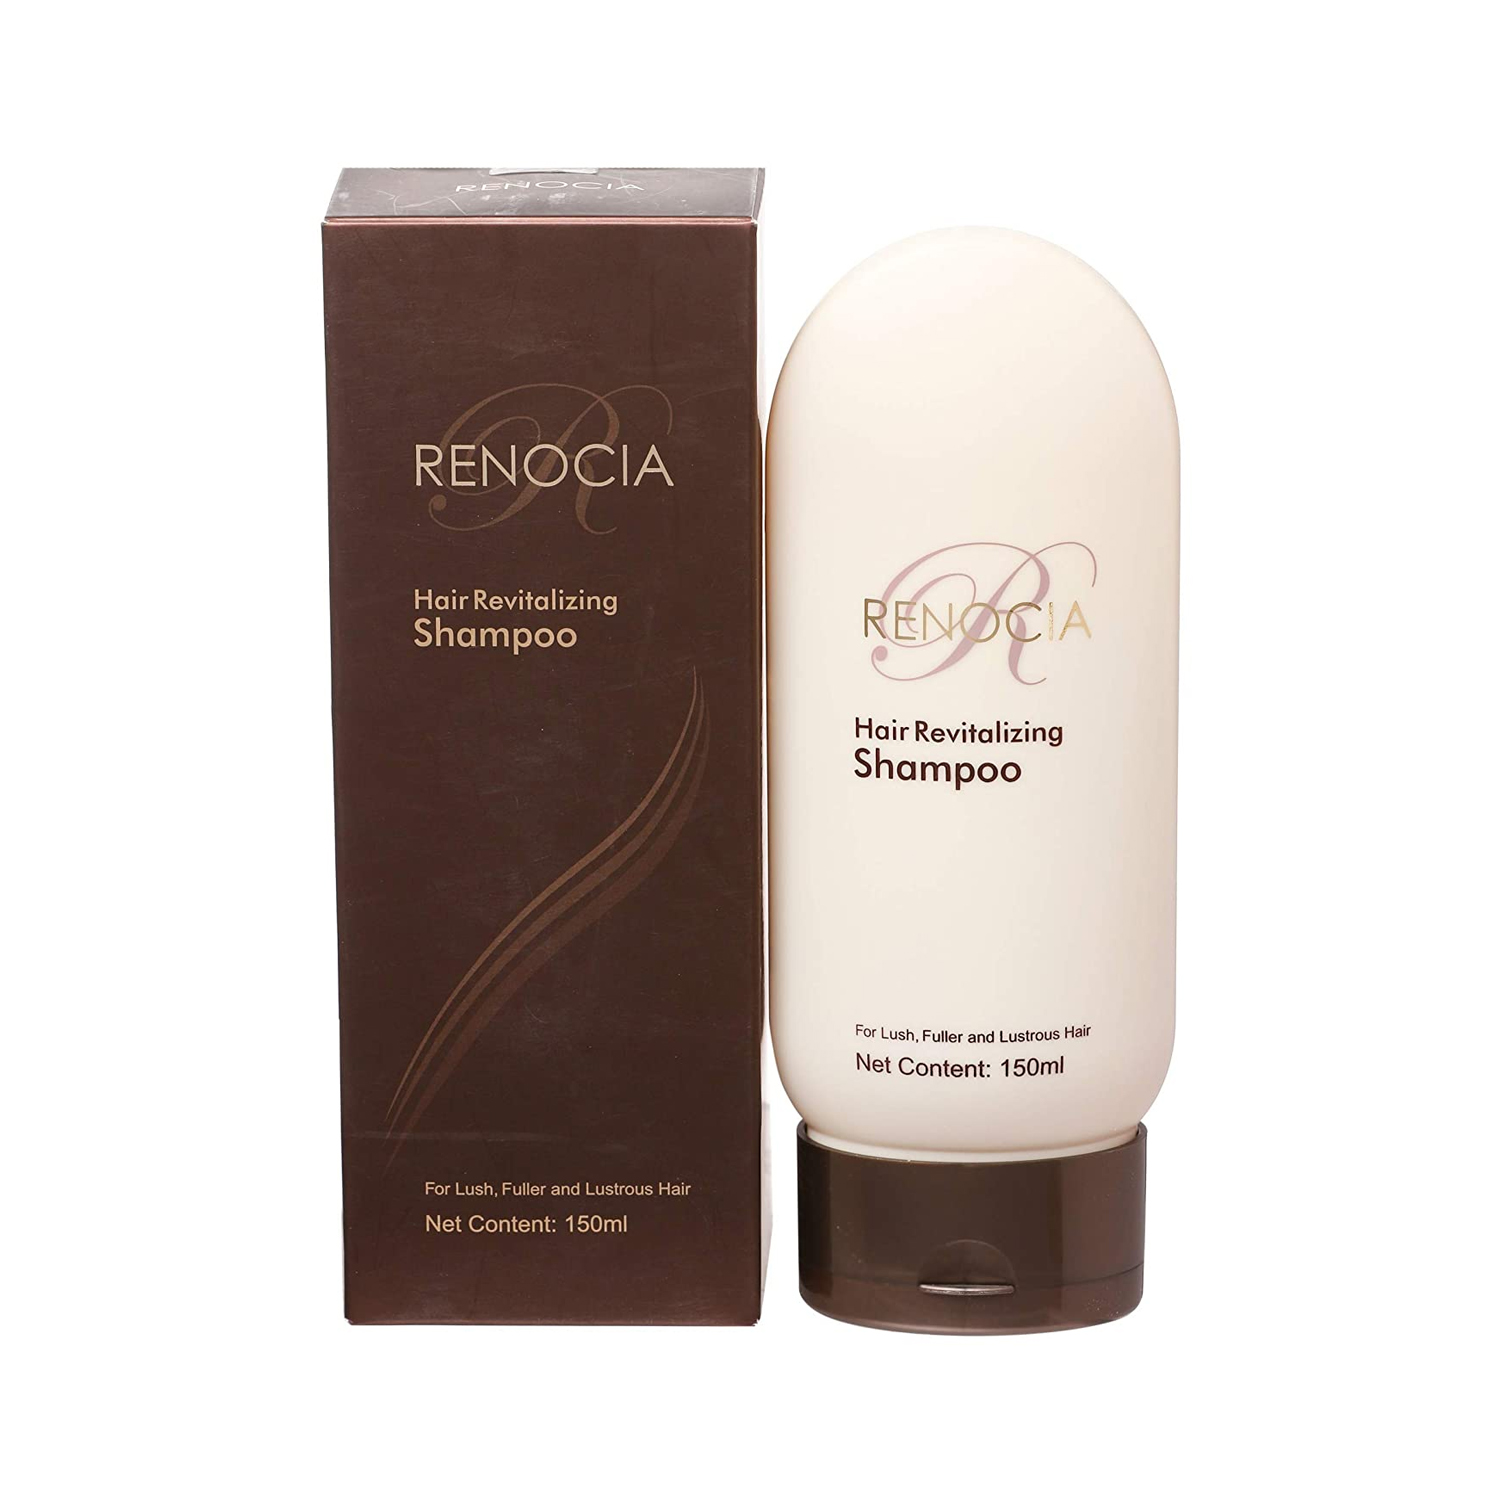 Renocia hair revitalizing shampoo